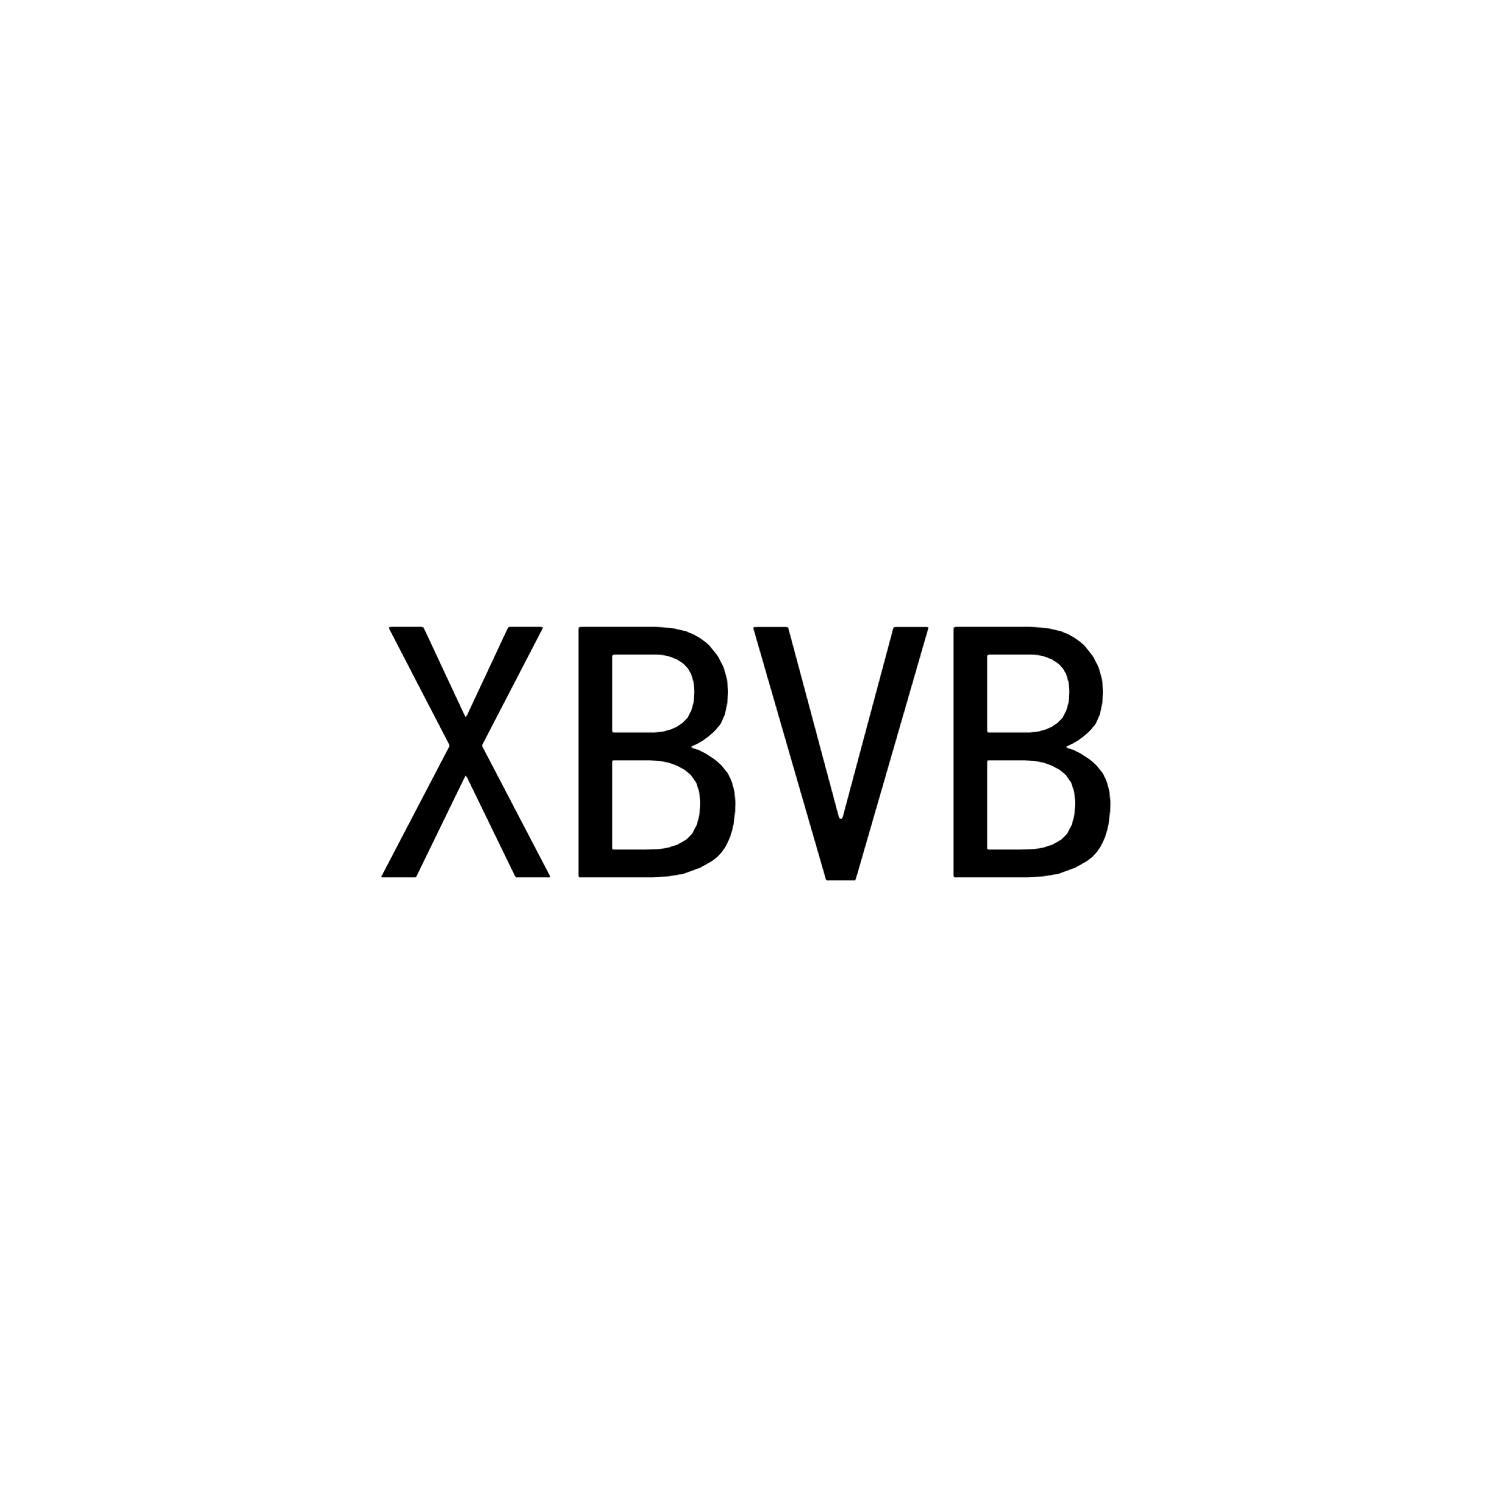 XBVB